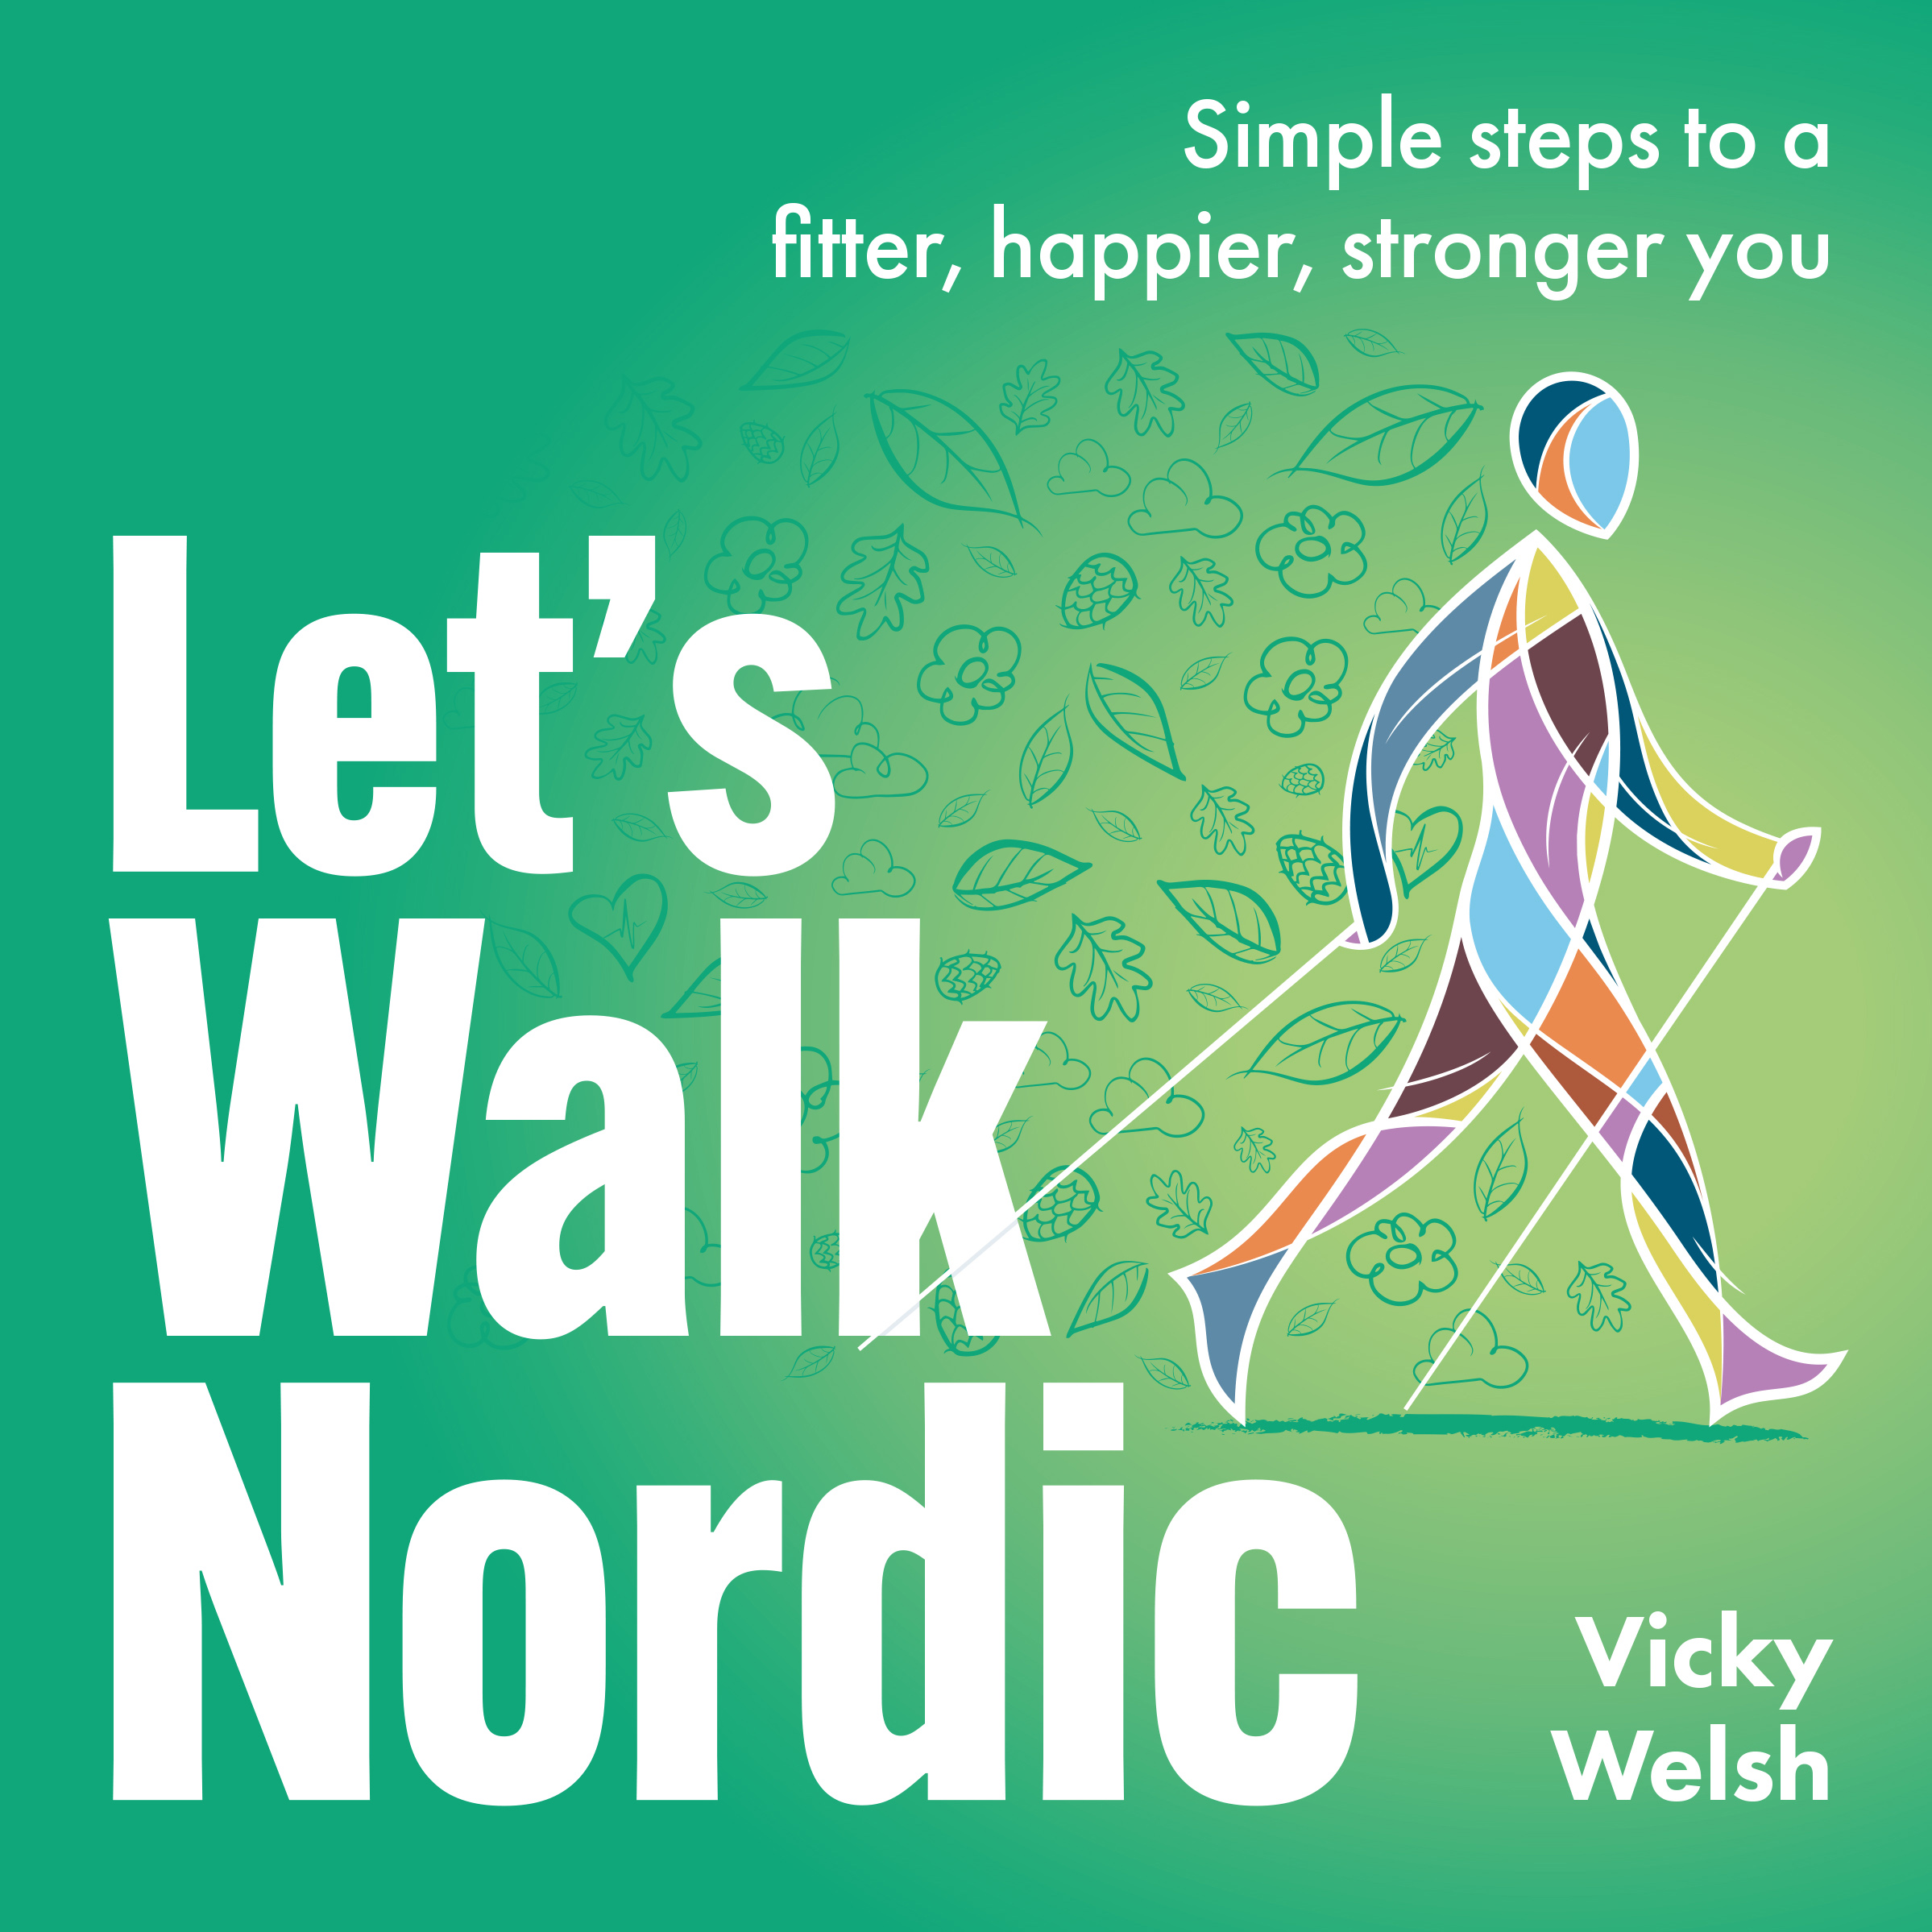 Let’s Walk Nordic